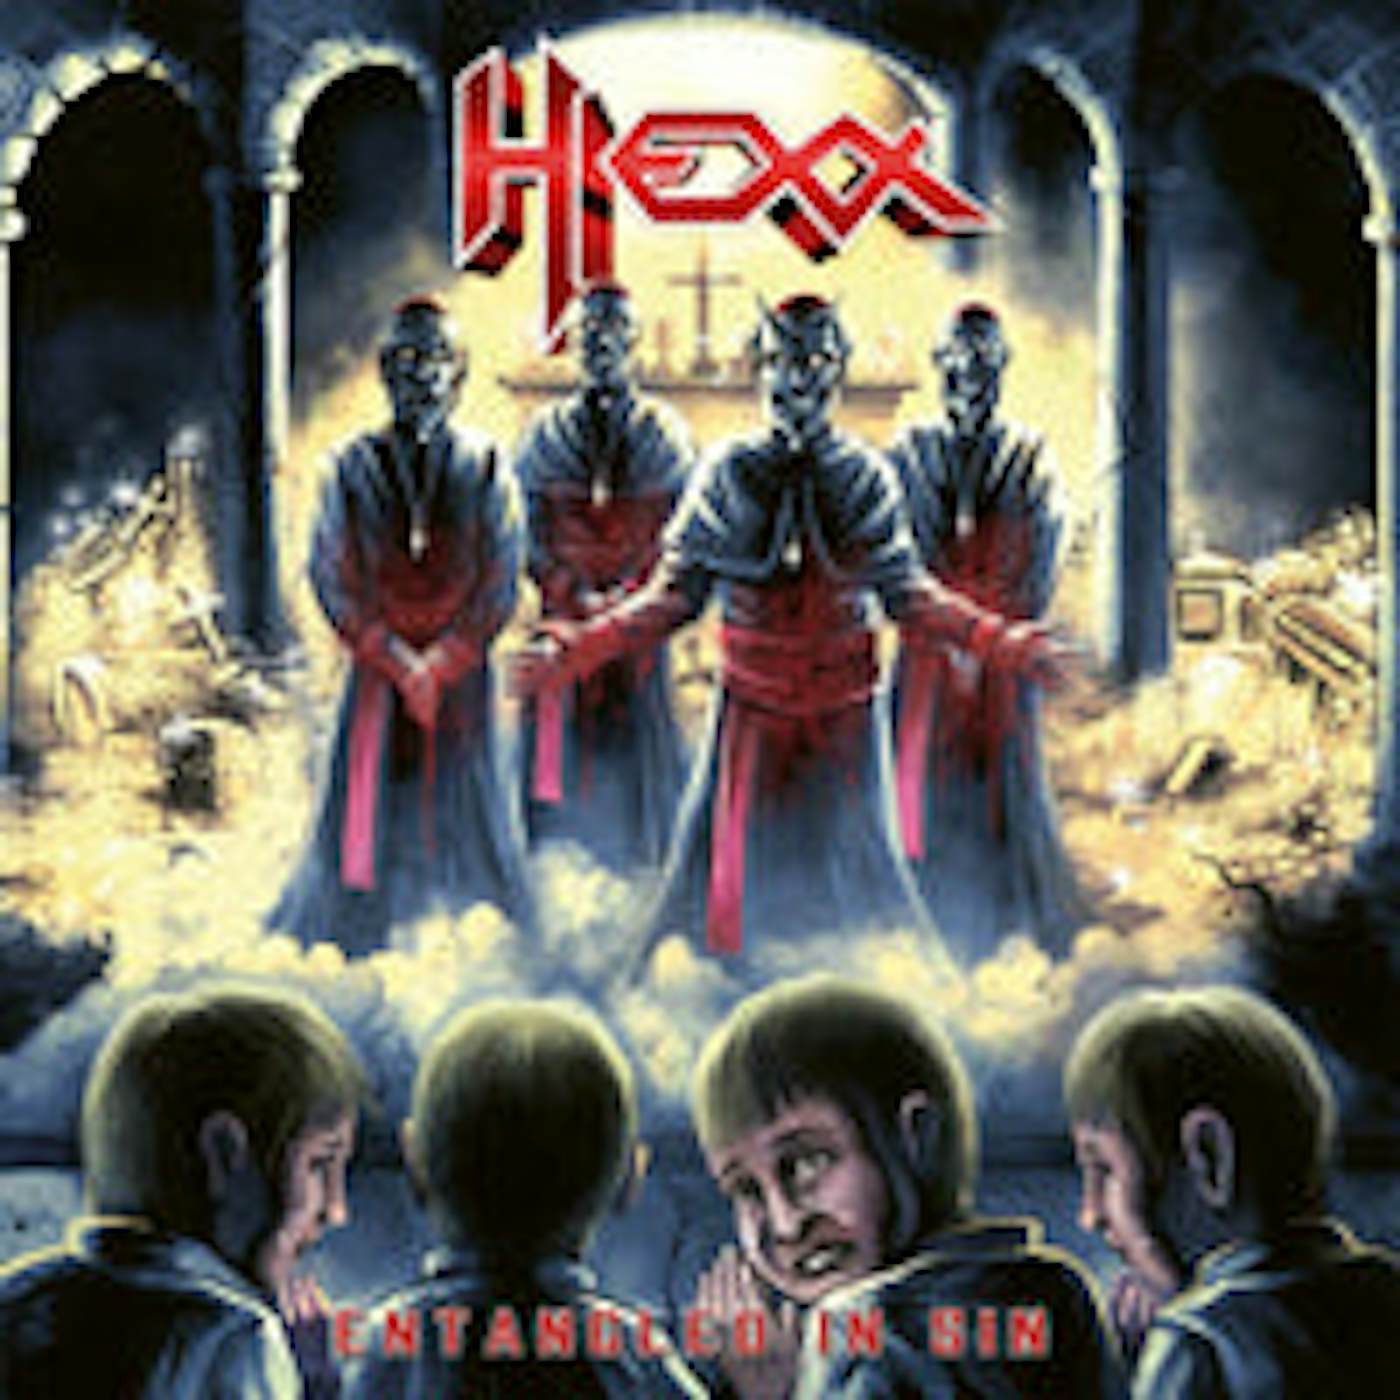 Hexx LP - Entangled In Sin (Red Vinyl)